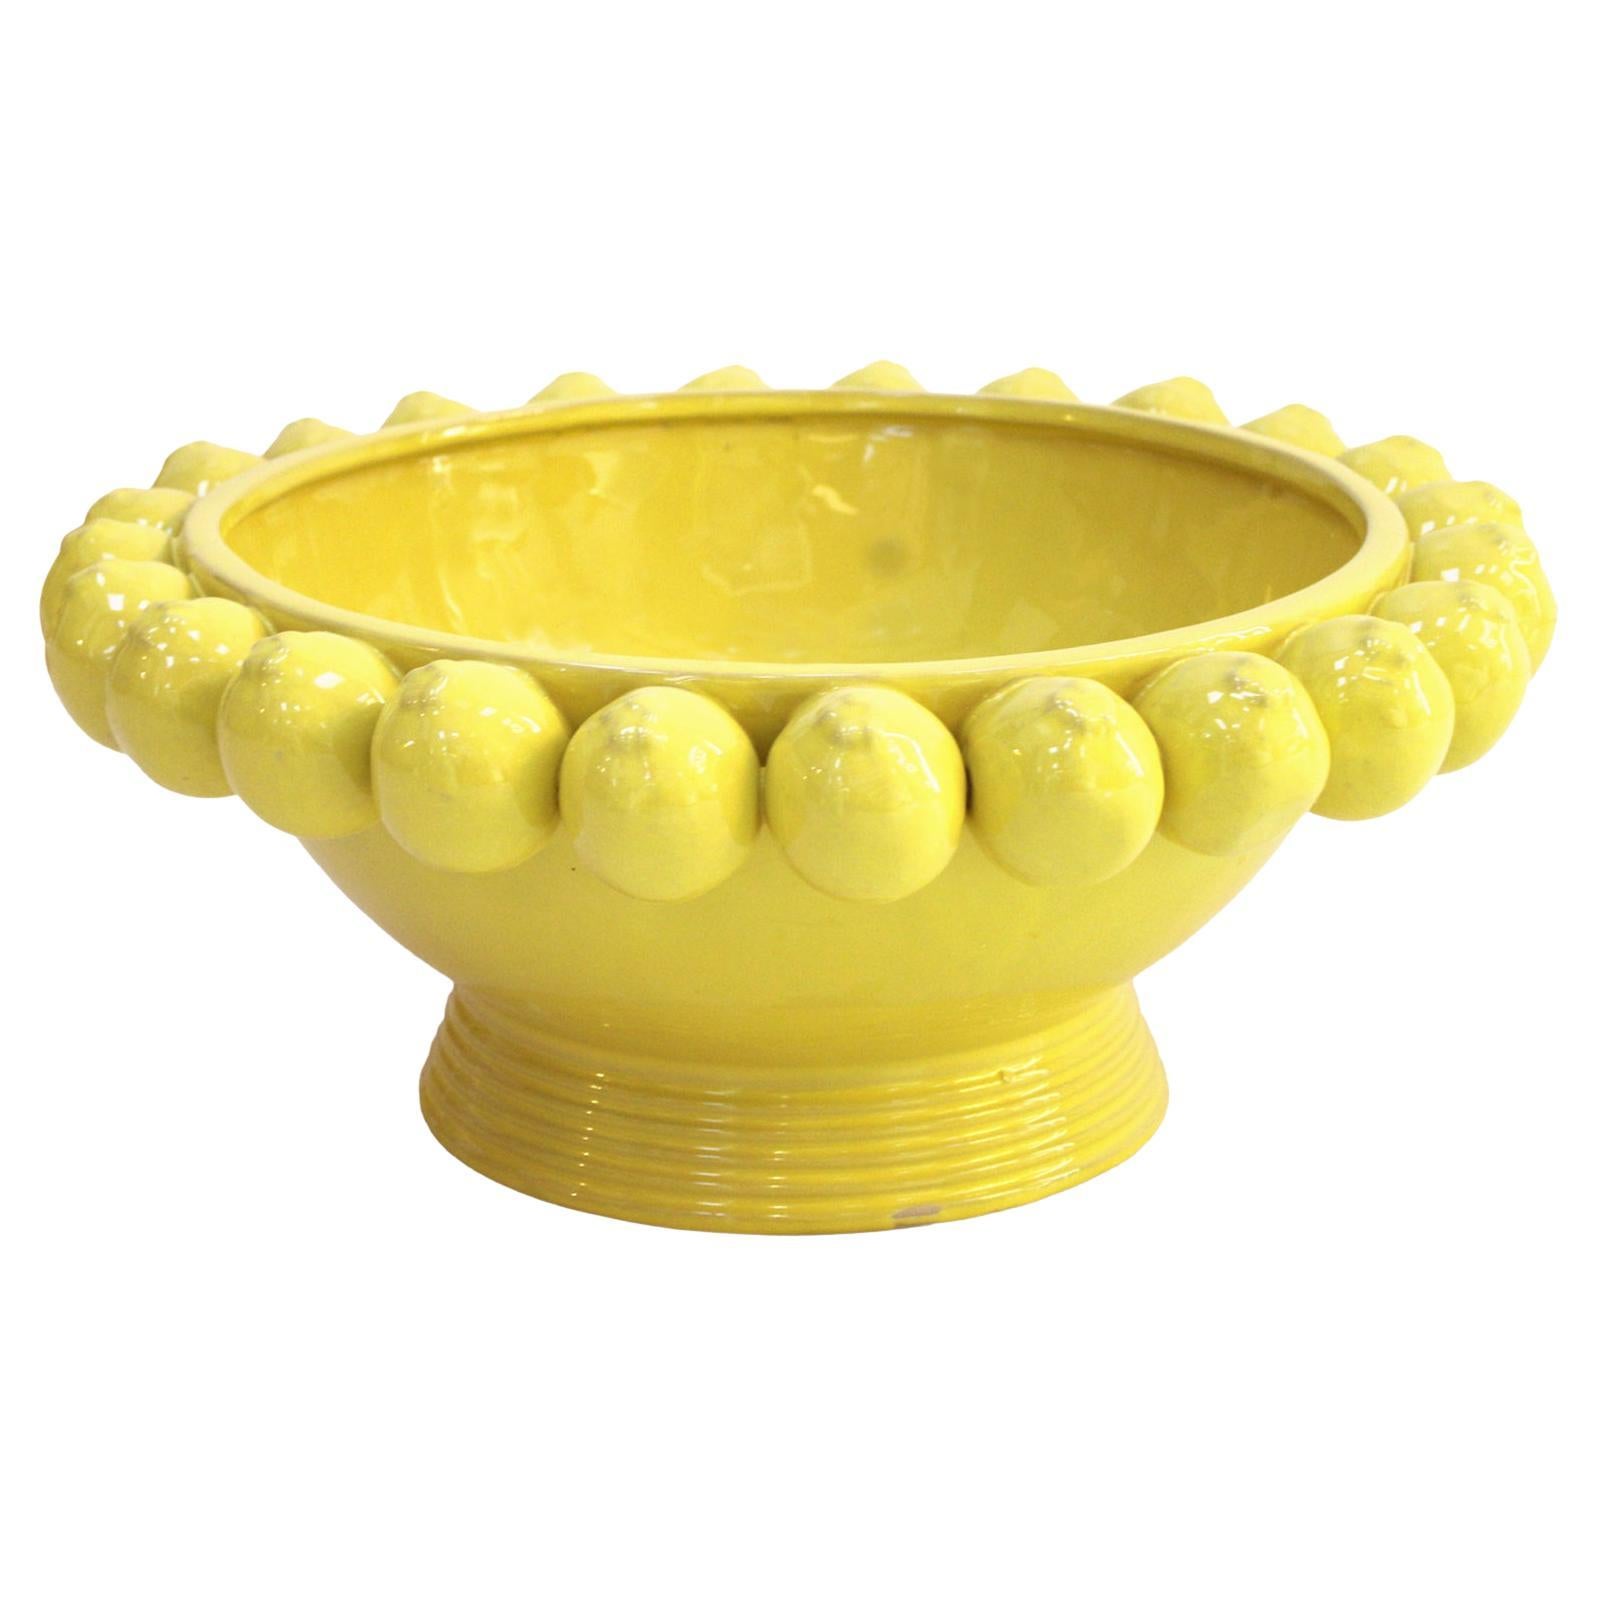 Italienische gelbe italienische Keramikvase mit gelben Zitronen-Obstmotiven aus Keramik